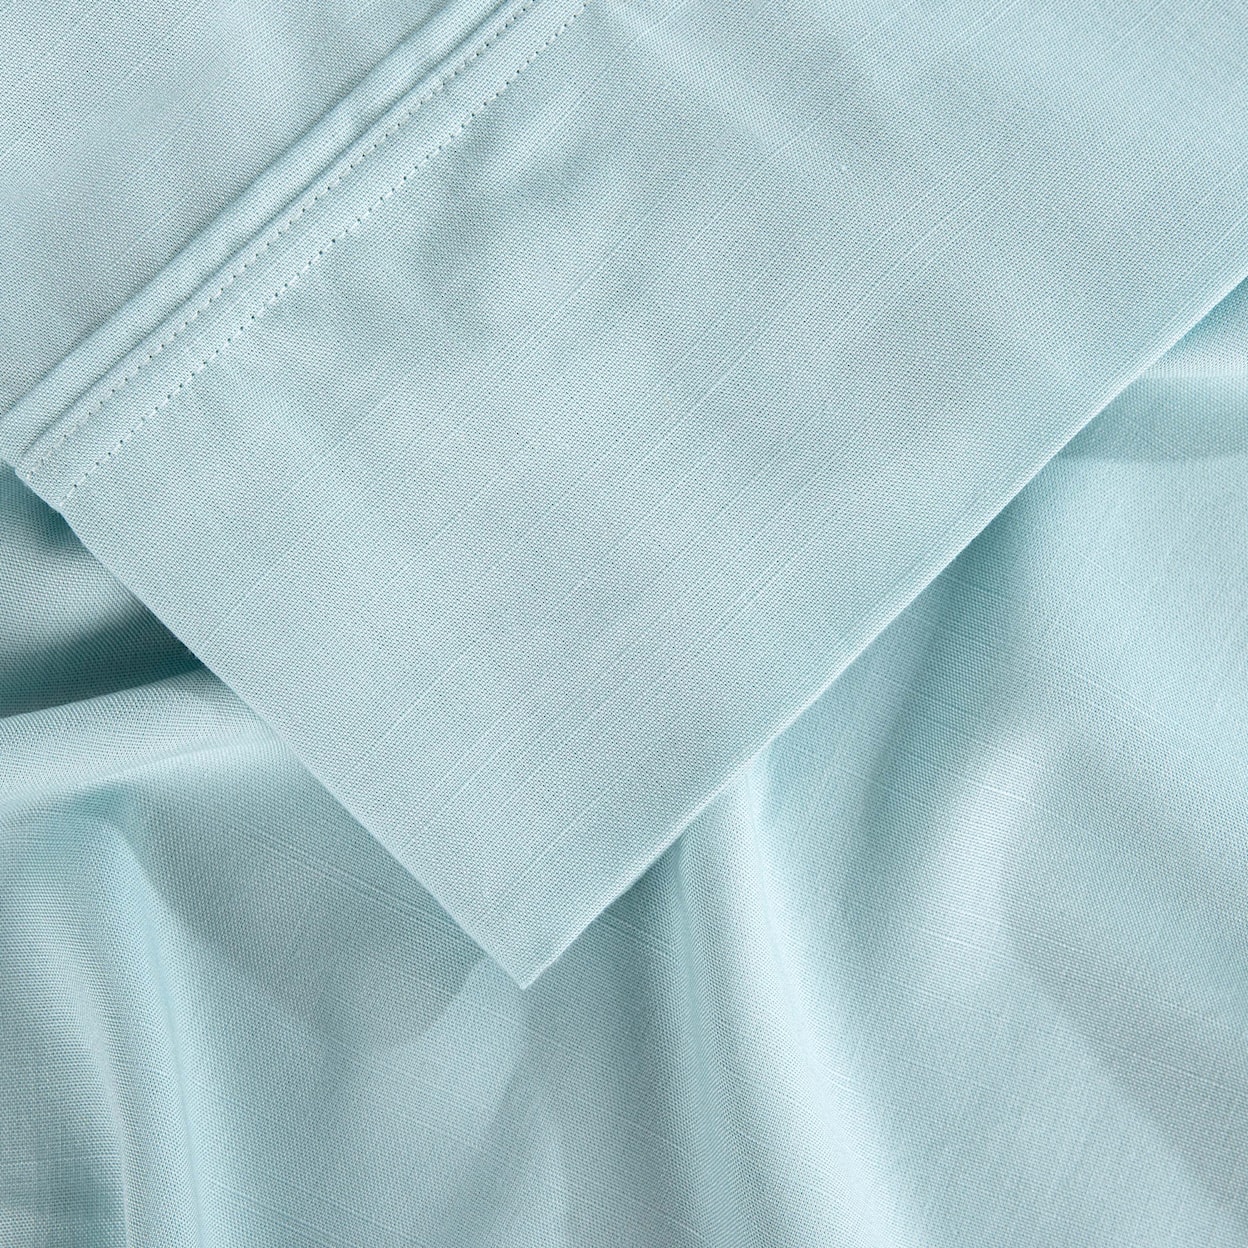 Bedgear Hyper Linen Sheets Sheet Set, Misty Blue, King